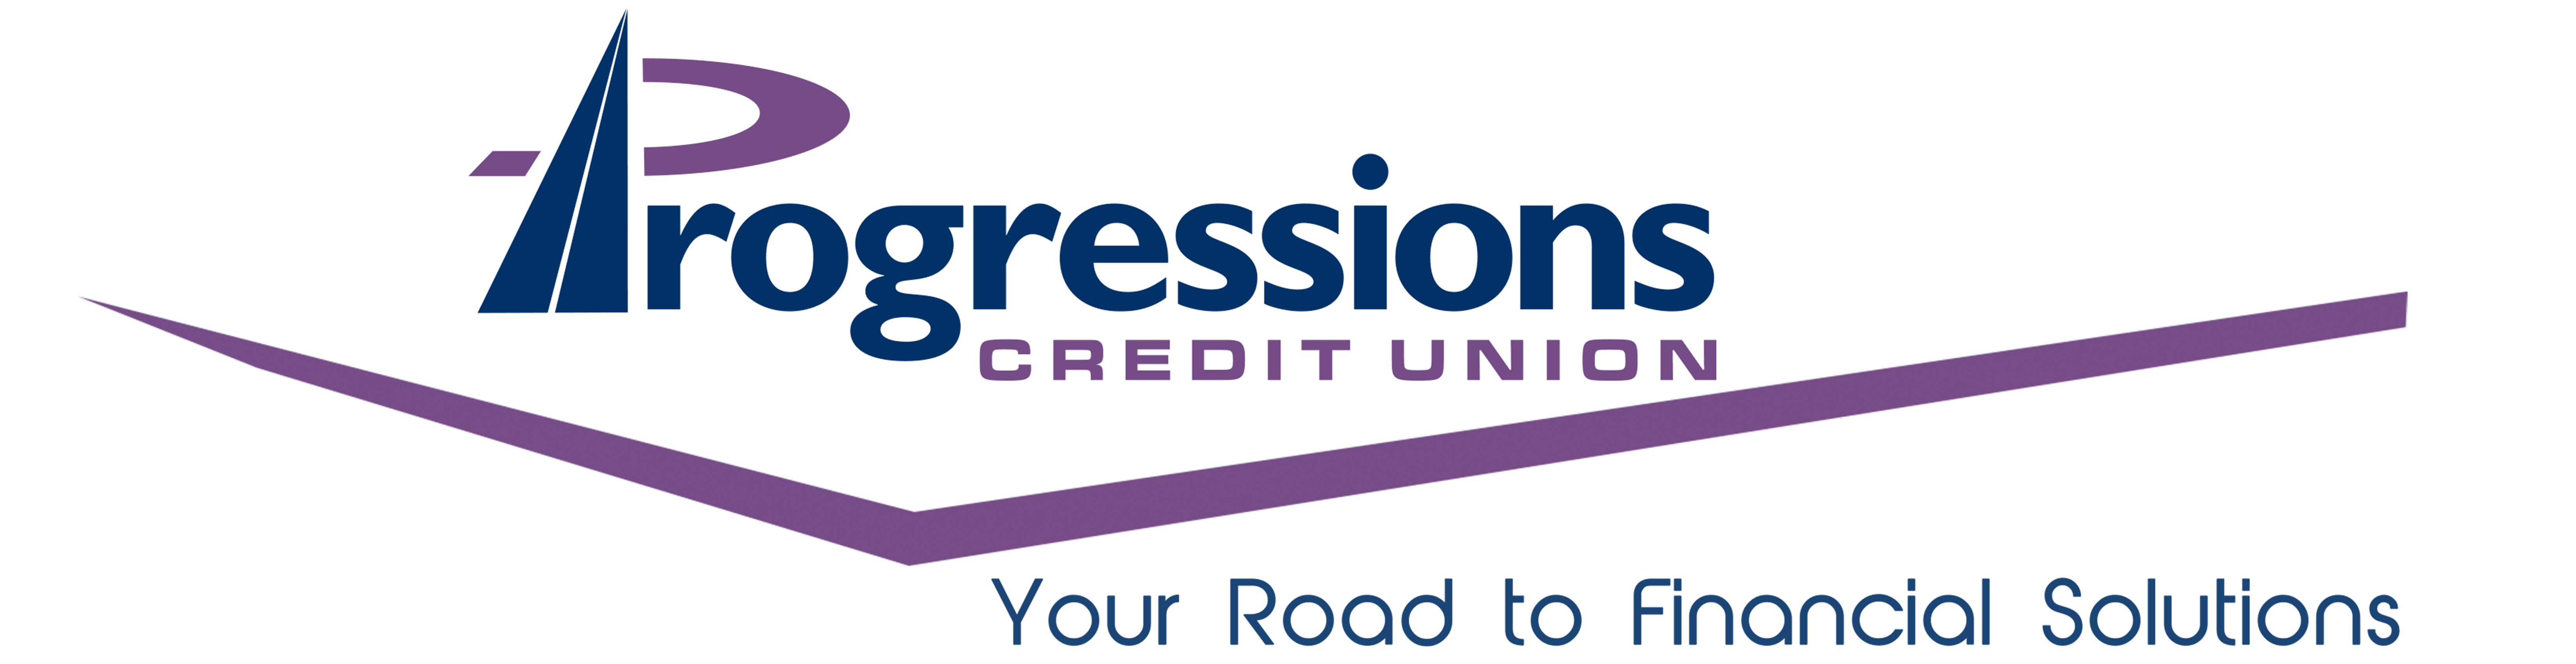 home - progressions credit union